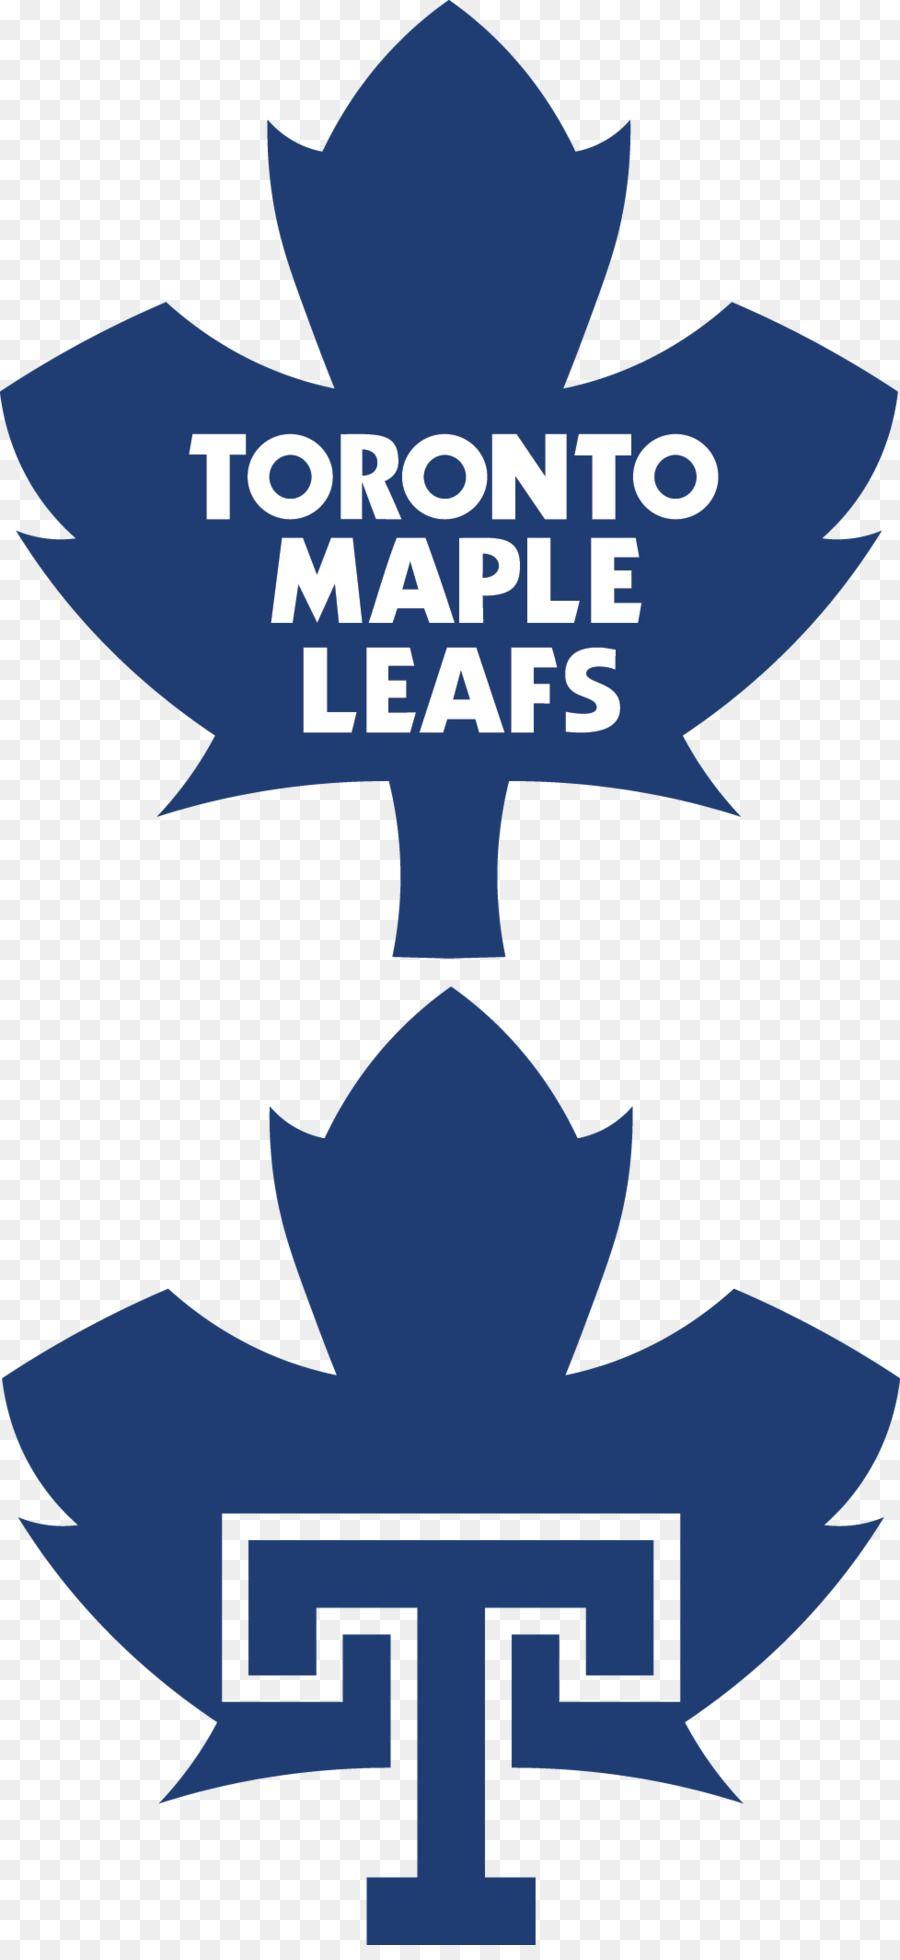 Red Maple Leaf Hockey Logo - Toronto Maple Leafs National Hockey League Scotiabank Arena St